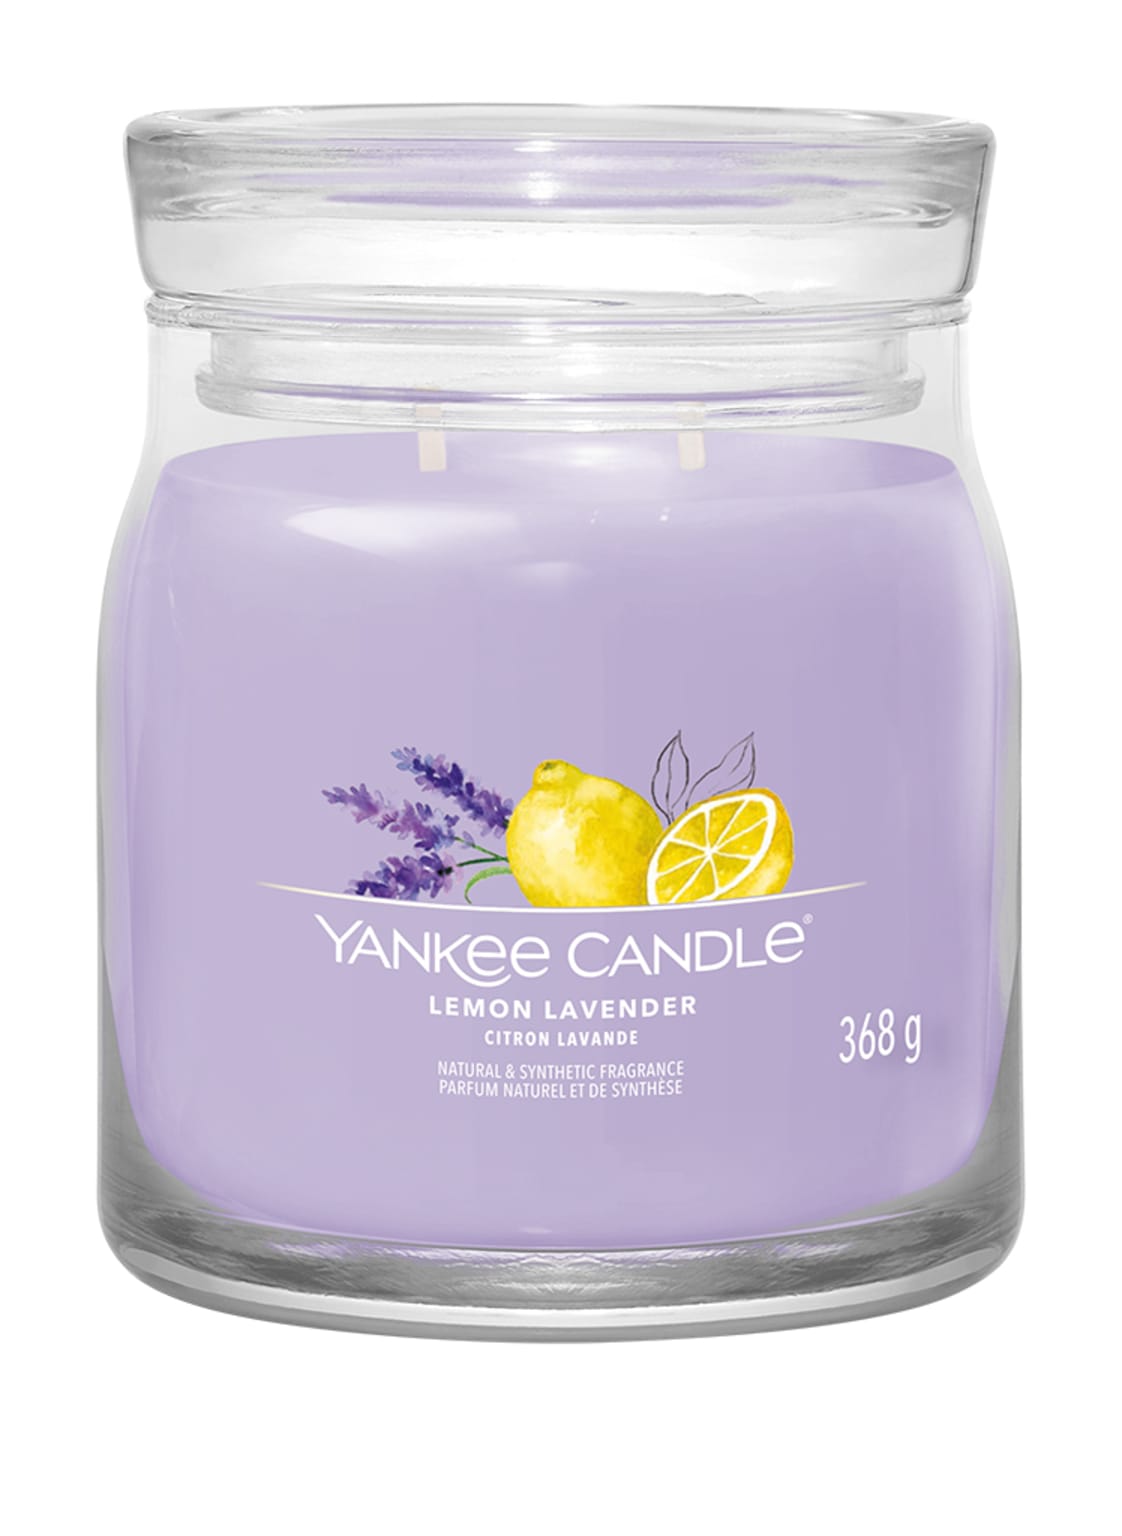 Yankee Candle Lemon Lavender Duftkerze 368 g von Yankee Candle